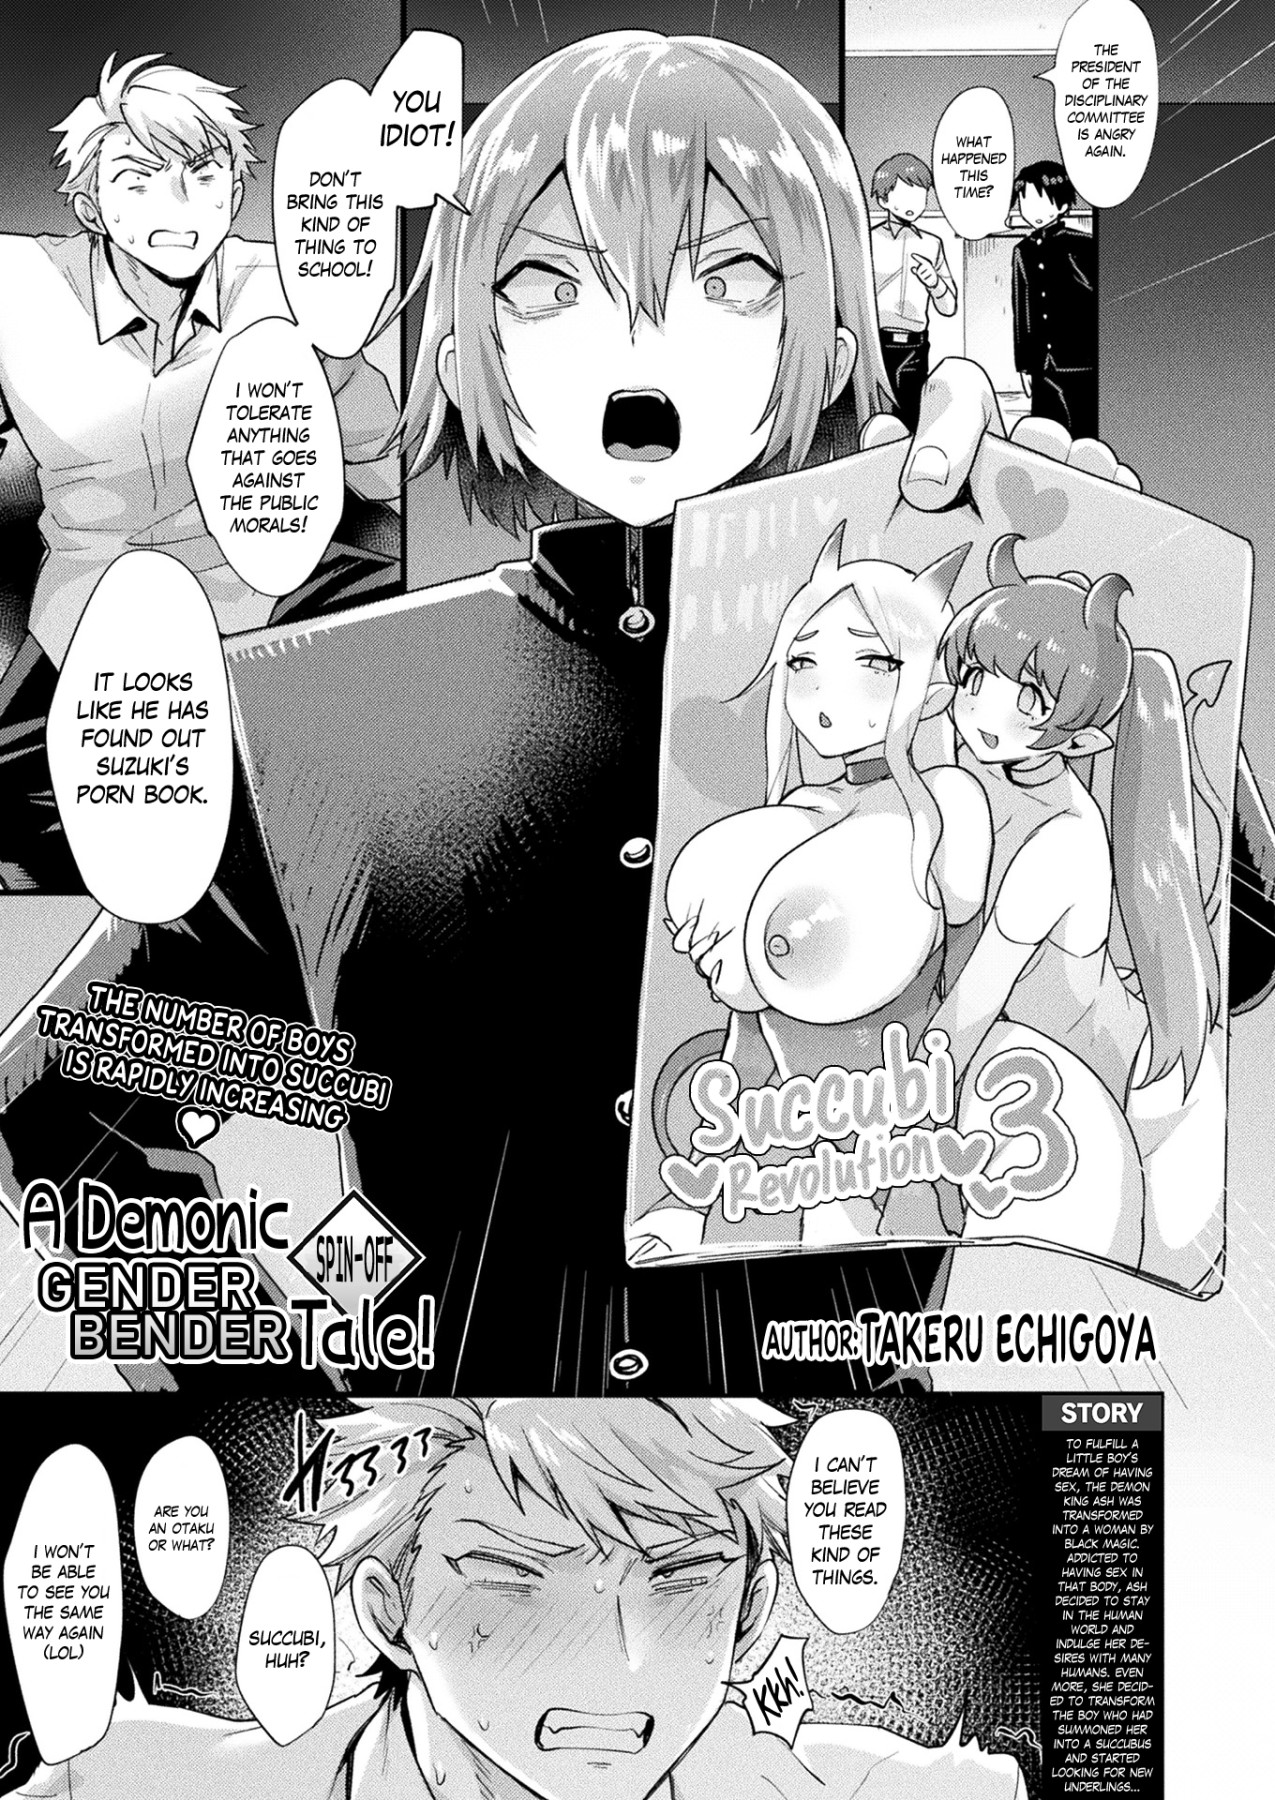 Hentai Manga Comic-A Demonic Gender Bender Tale! Spin-Off-Read-1